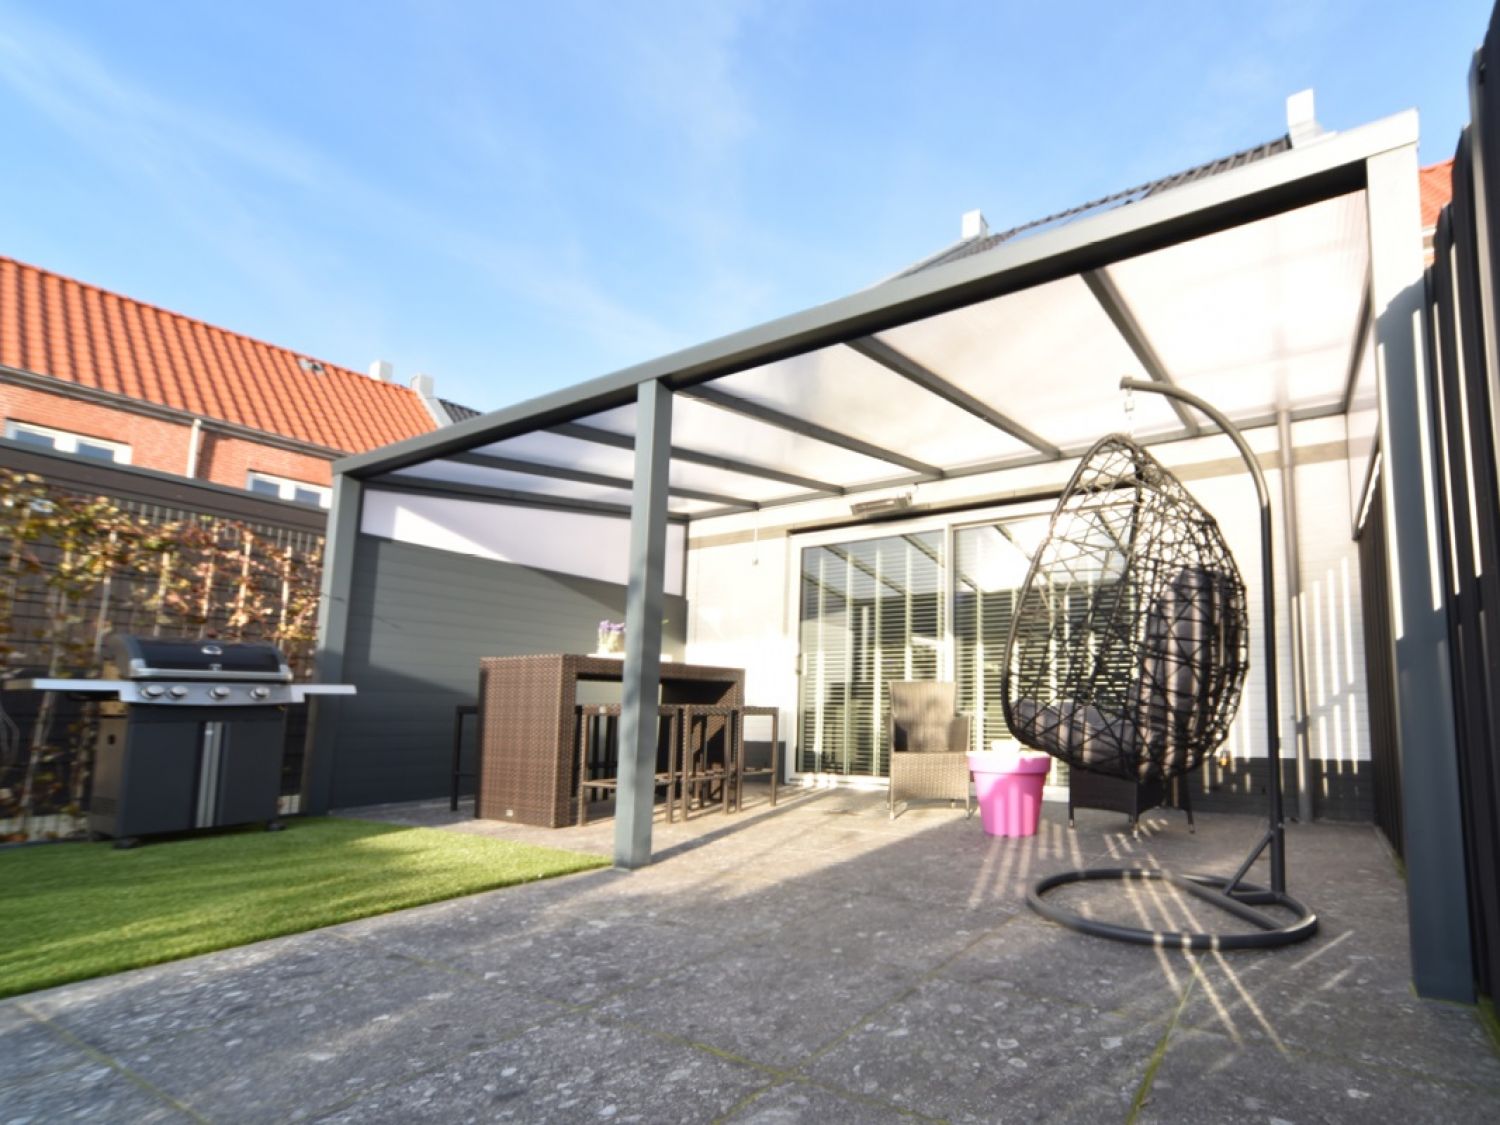 Greenline veranda 700x300 cm - polycarbonaat dak